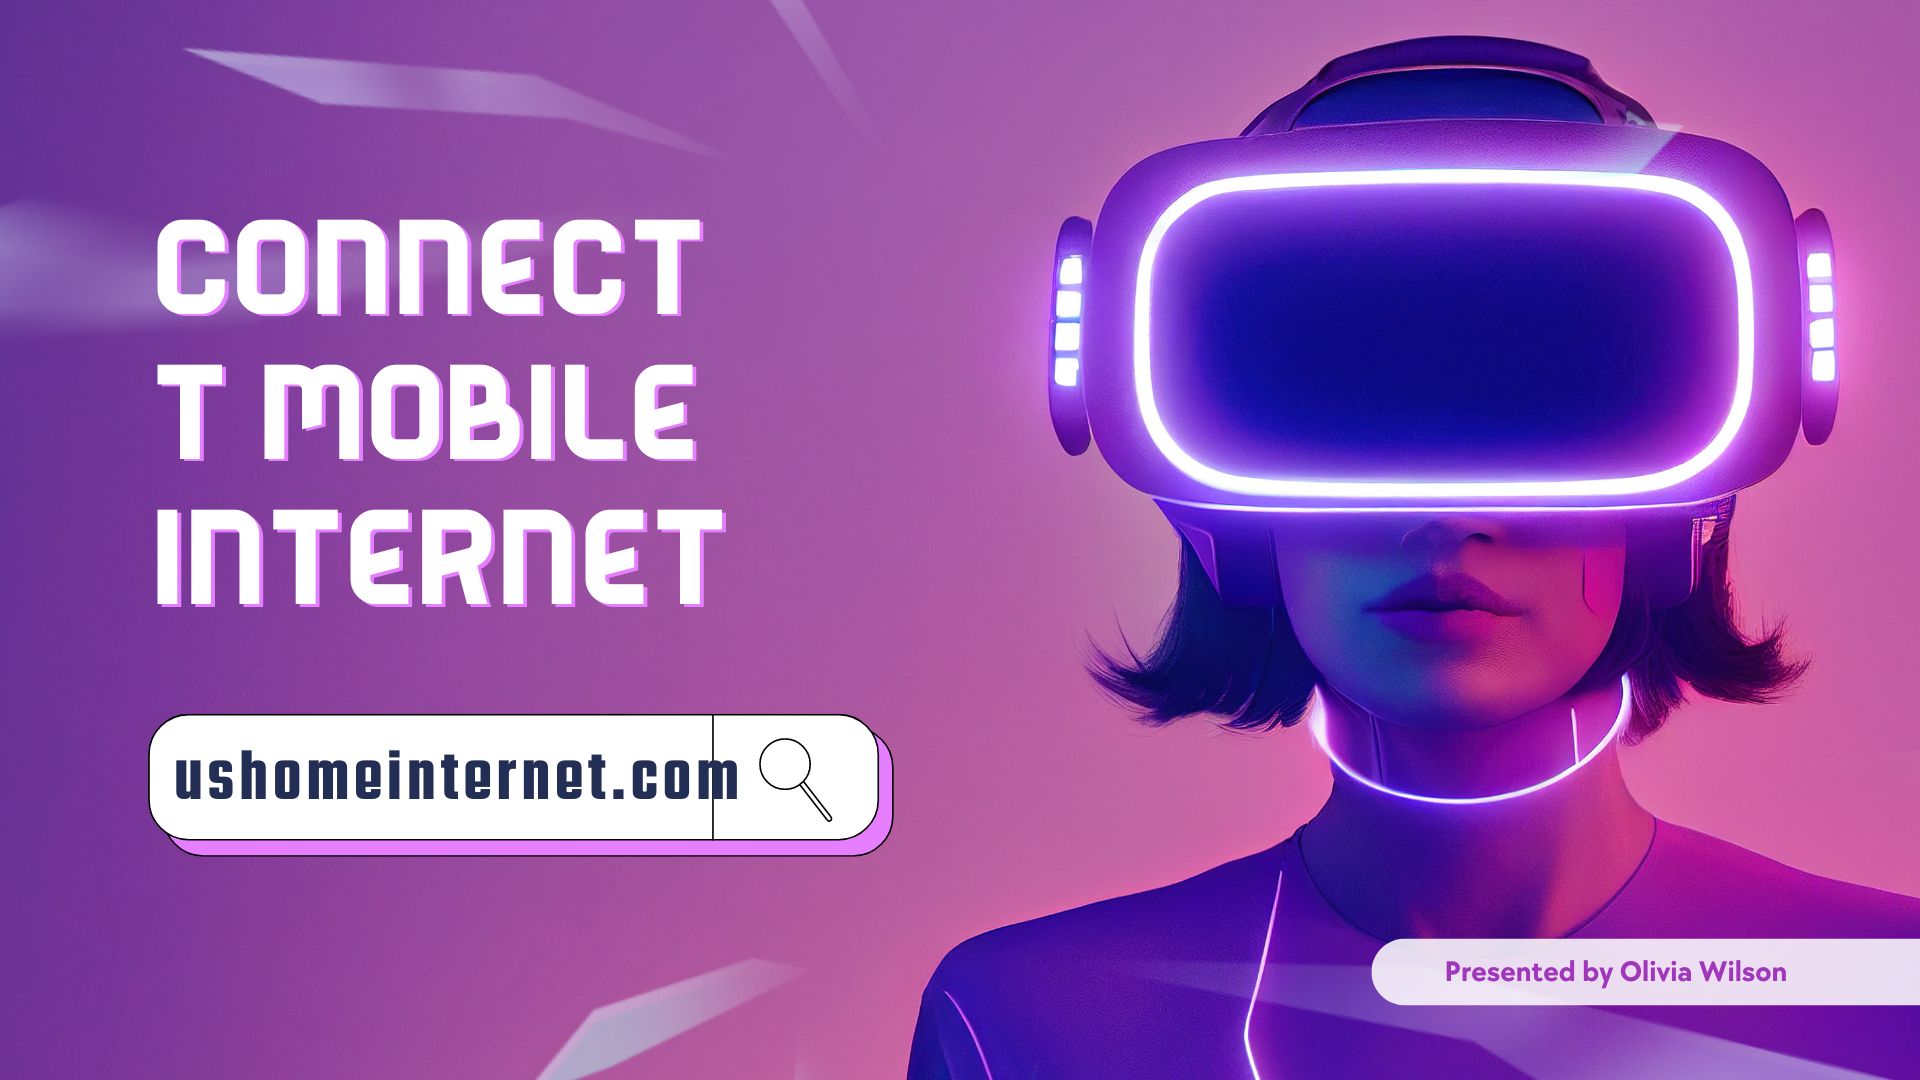 Connect t mobile internet